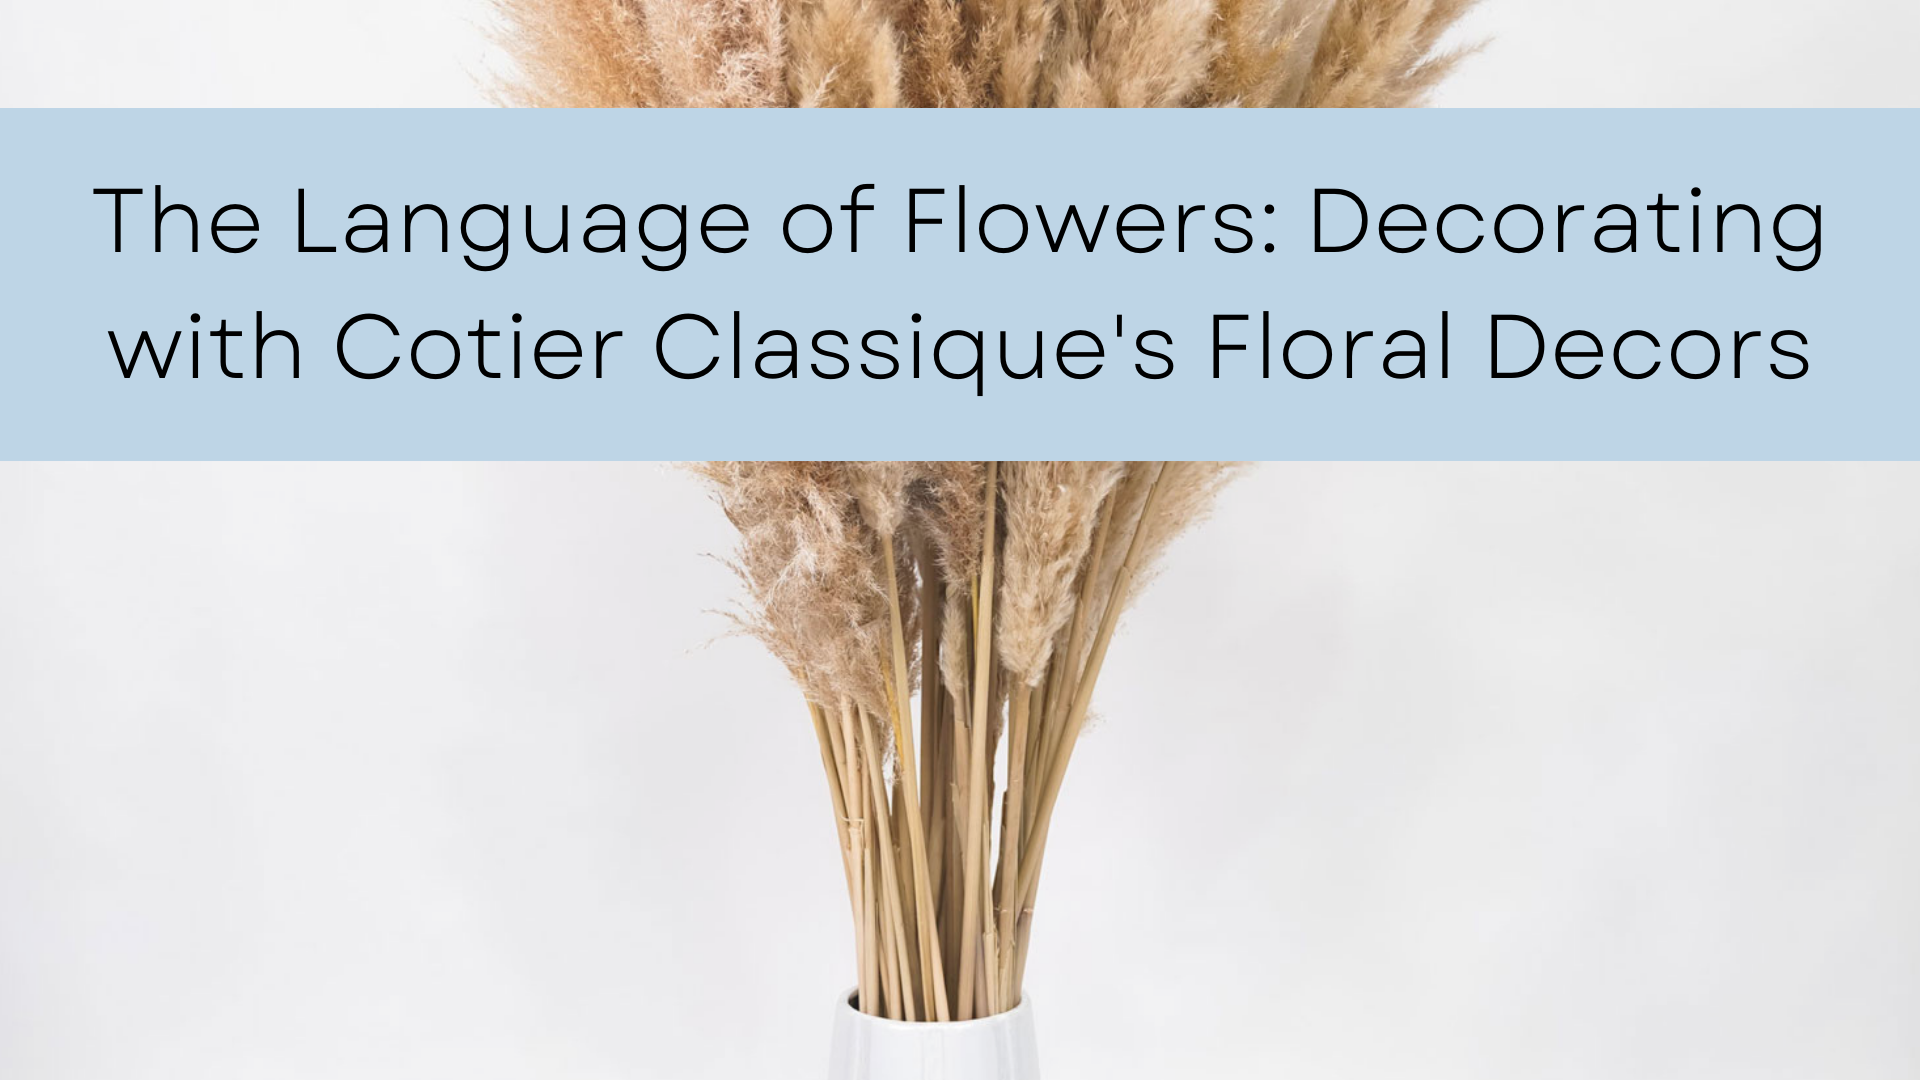 The Language of Flowers: Decorating with Cotier Classique's Floral Decors